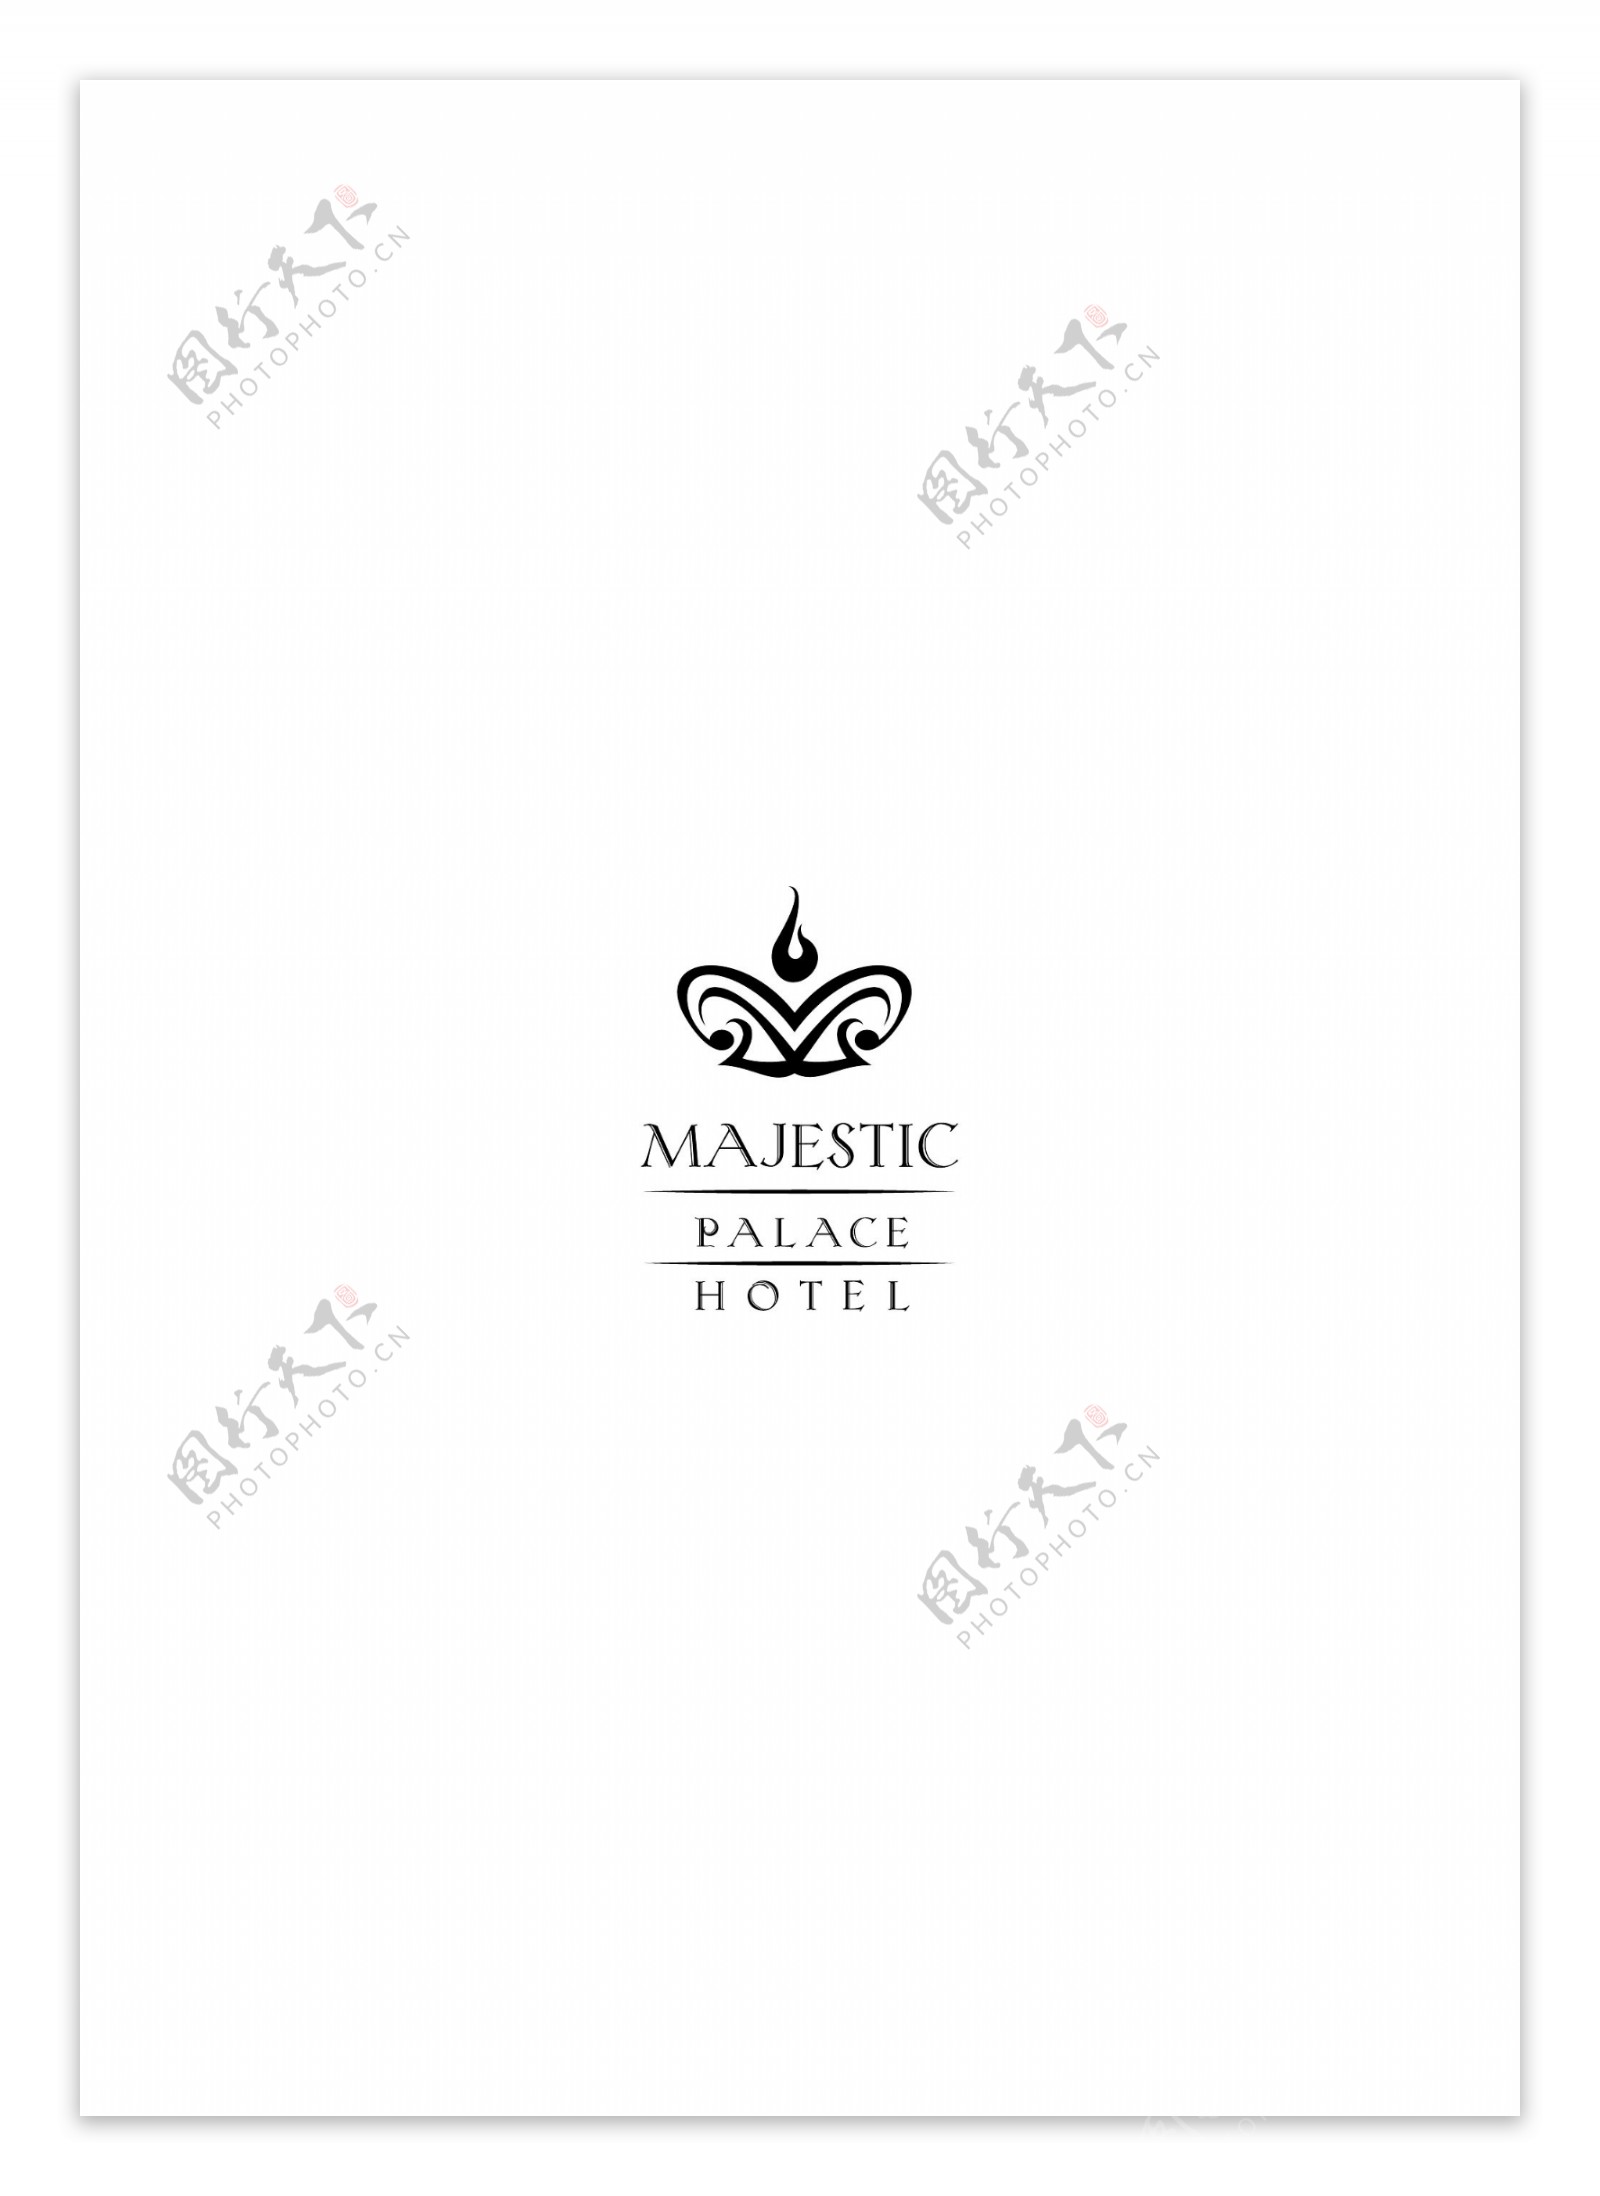 MajesticPalaceHotellogo设计欣赏MajesticPalaceHotel著名酒店LOGO下载标志设计欣赏